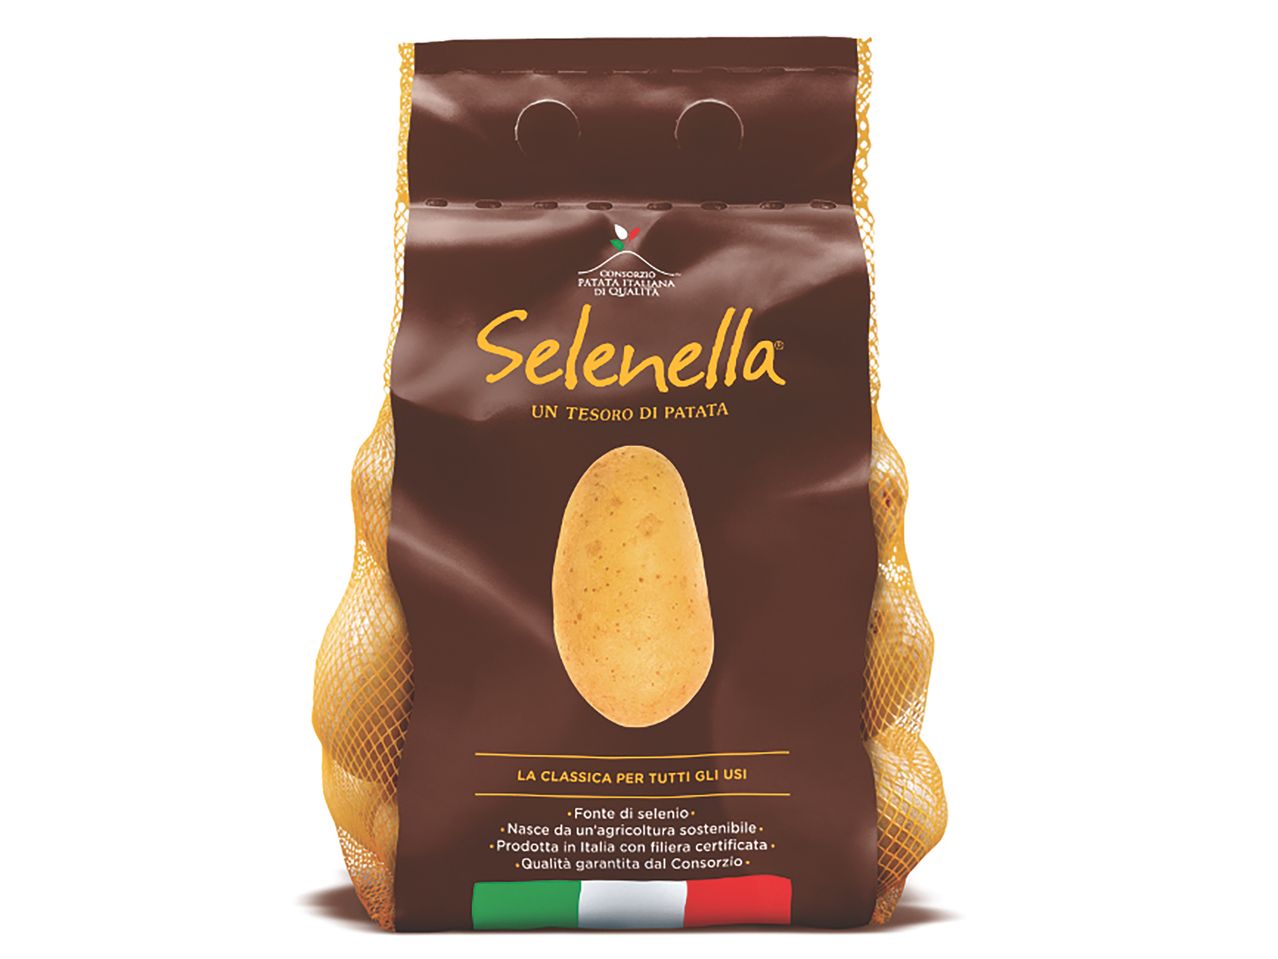 Go to full screen view: Selenella Potatoes - Image 1